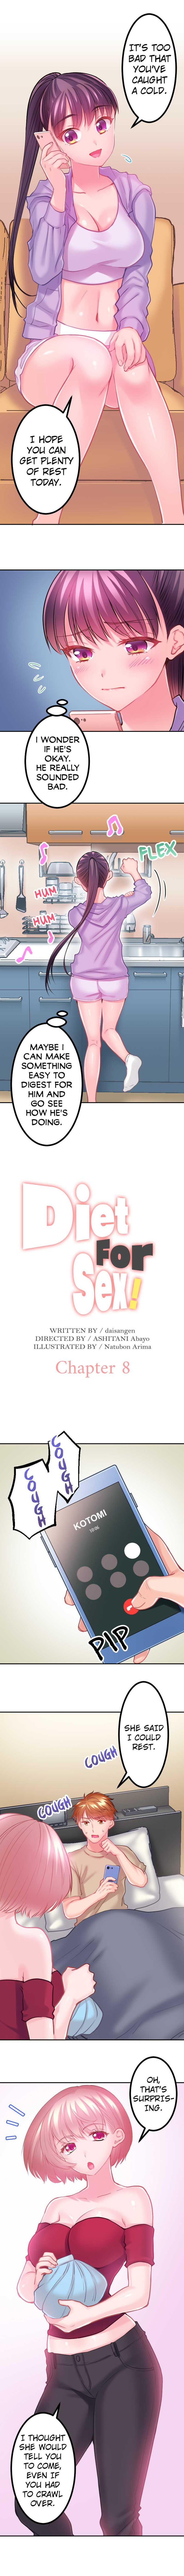 Diet For Sex! 87